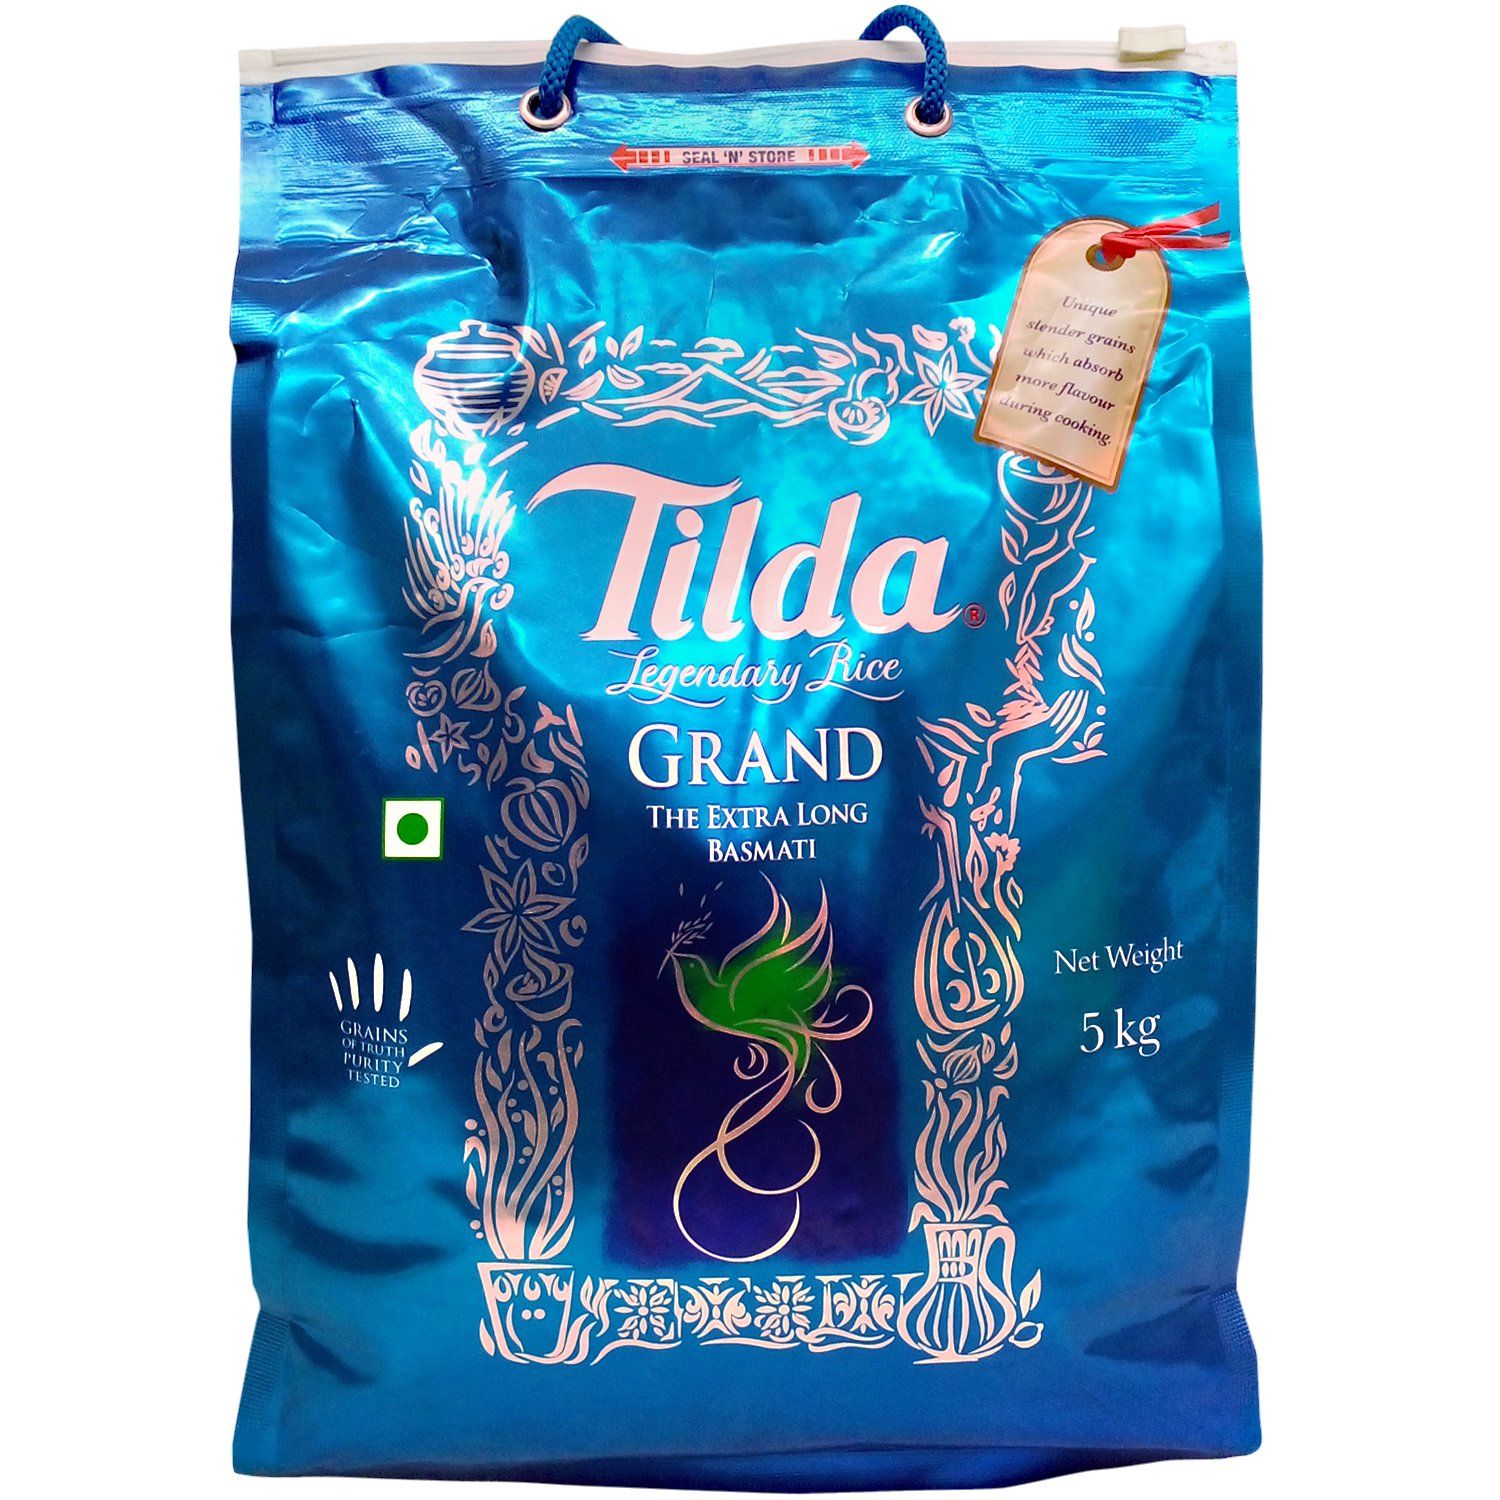 Tilda Basmati Rice Grand Image